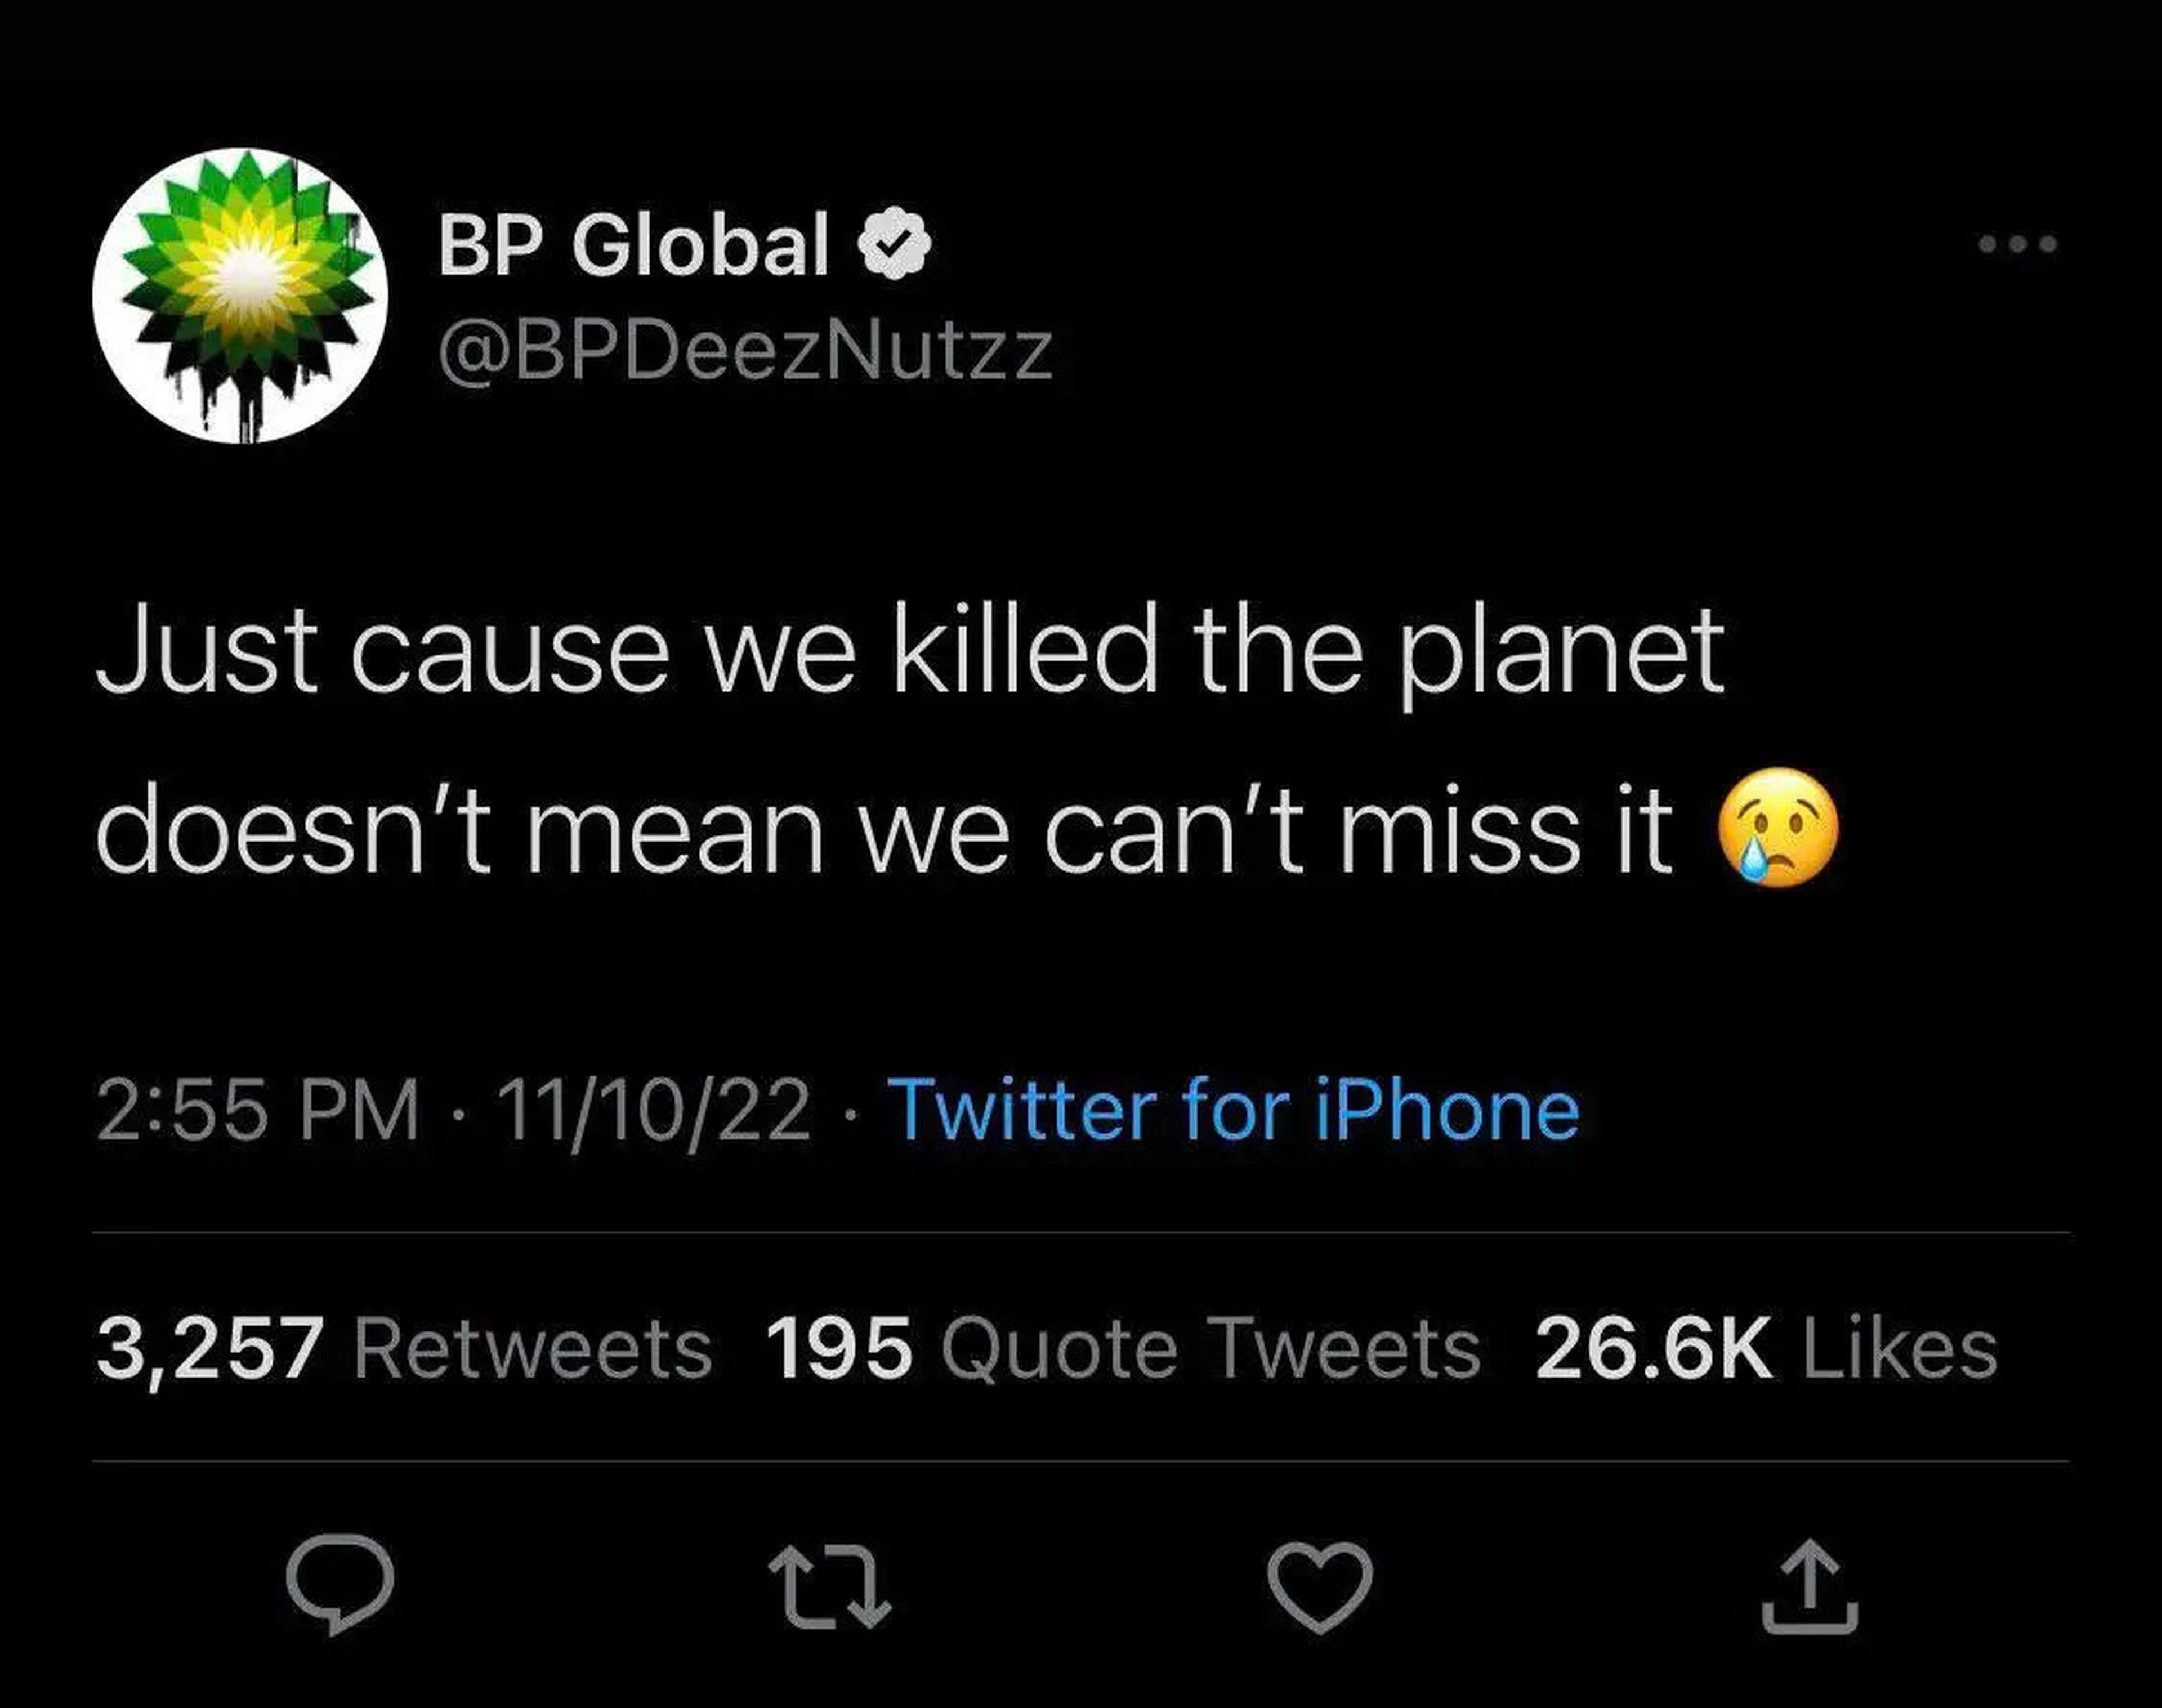 Tweet from BP impersonator